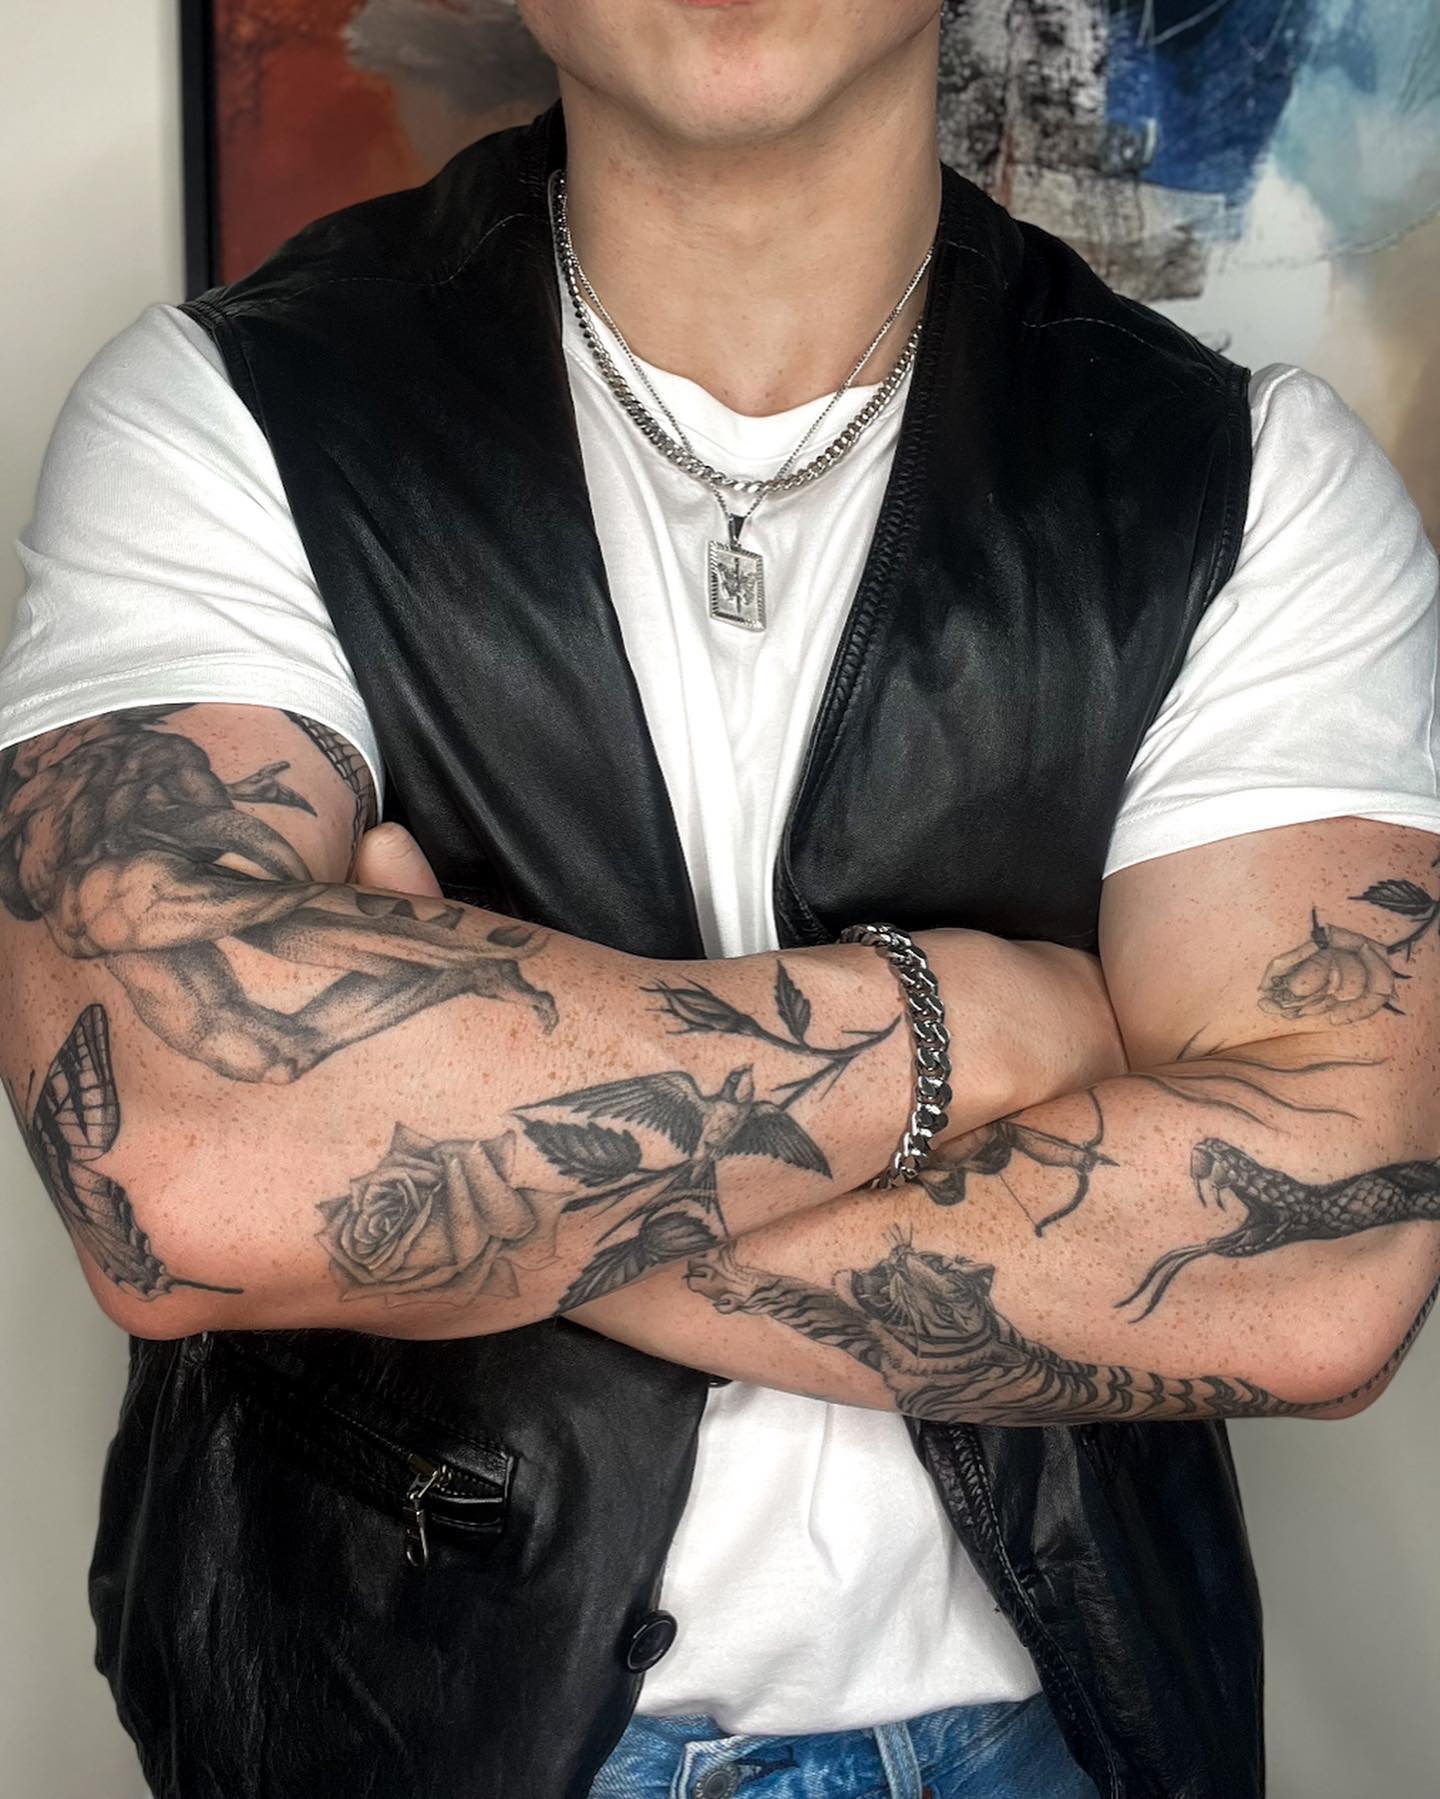 Tsunami Tattoo  patch sleeve in progress by Joshua  Facebook